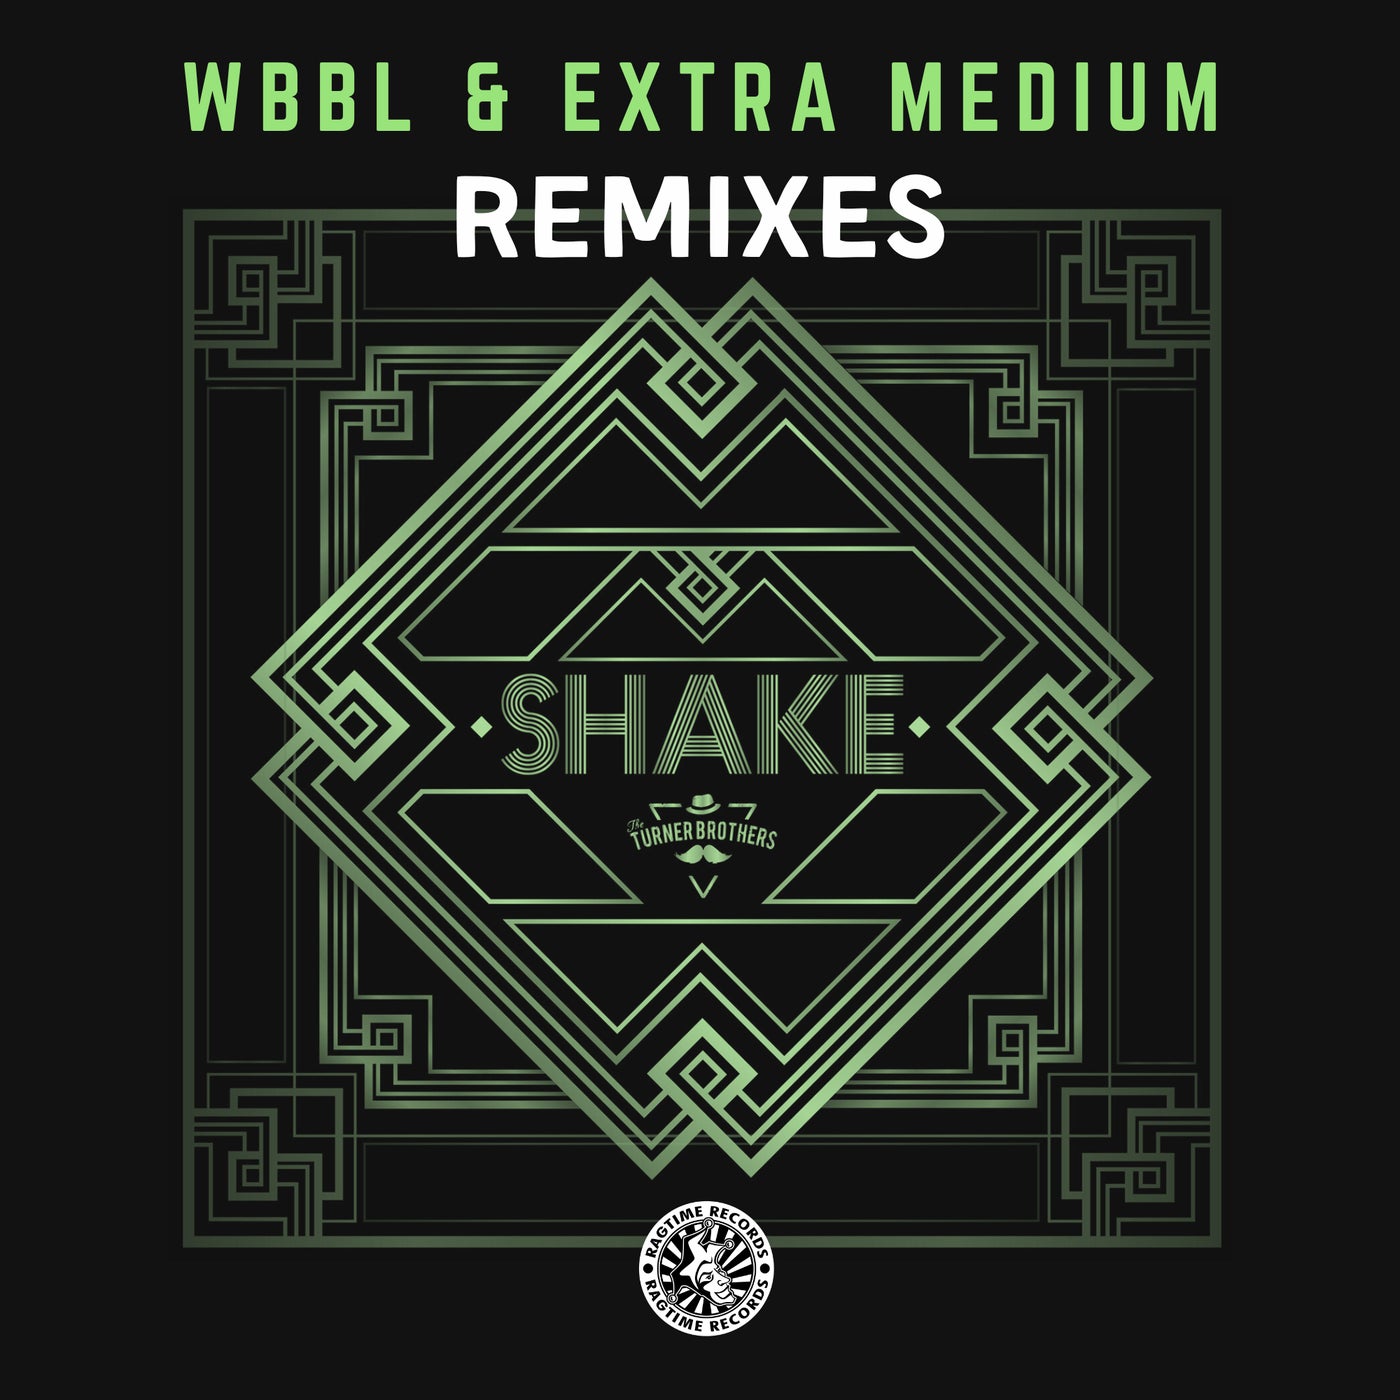 Shake - WBBL & Extra Medium Remixes